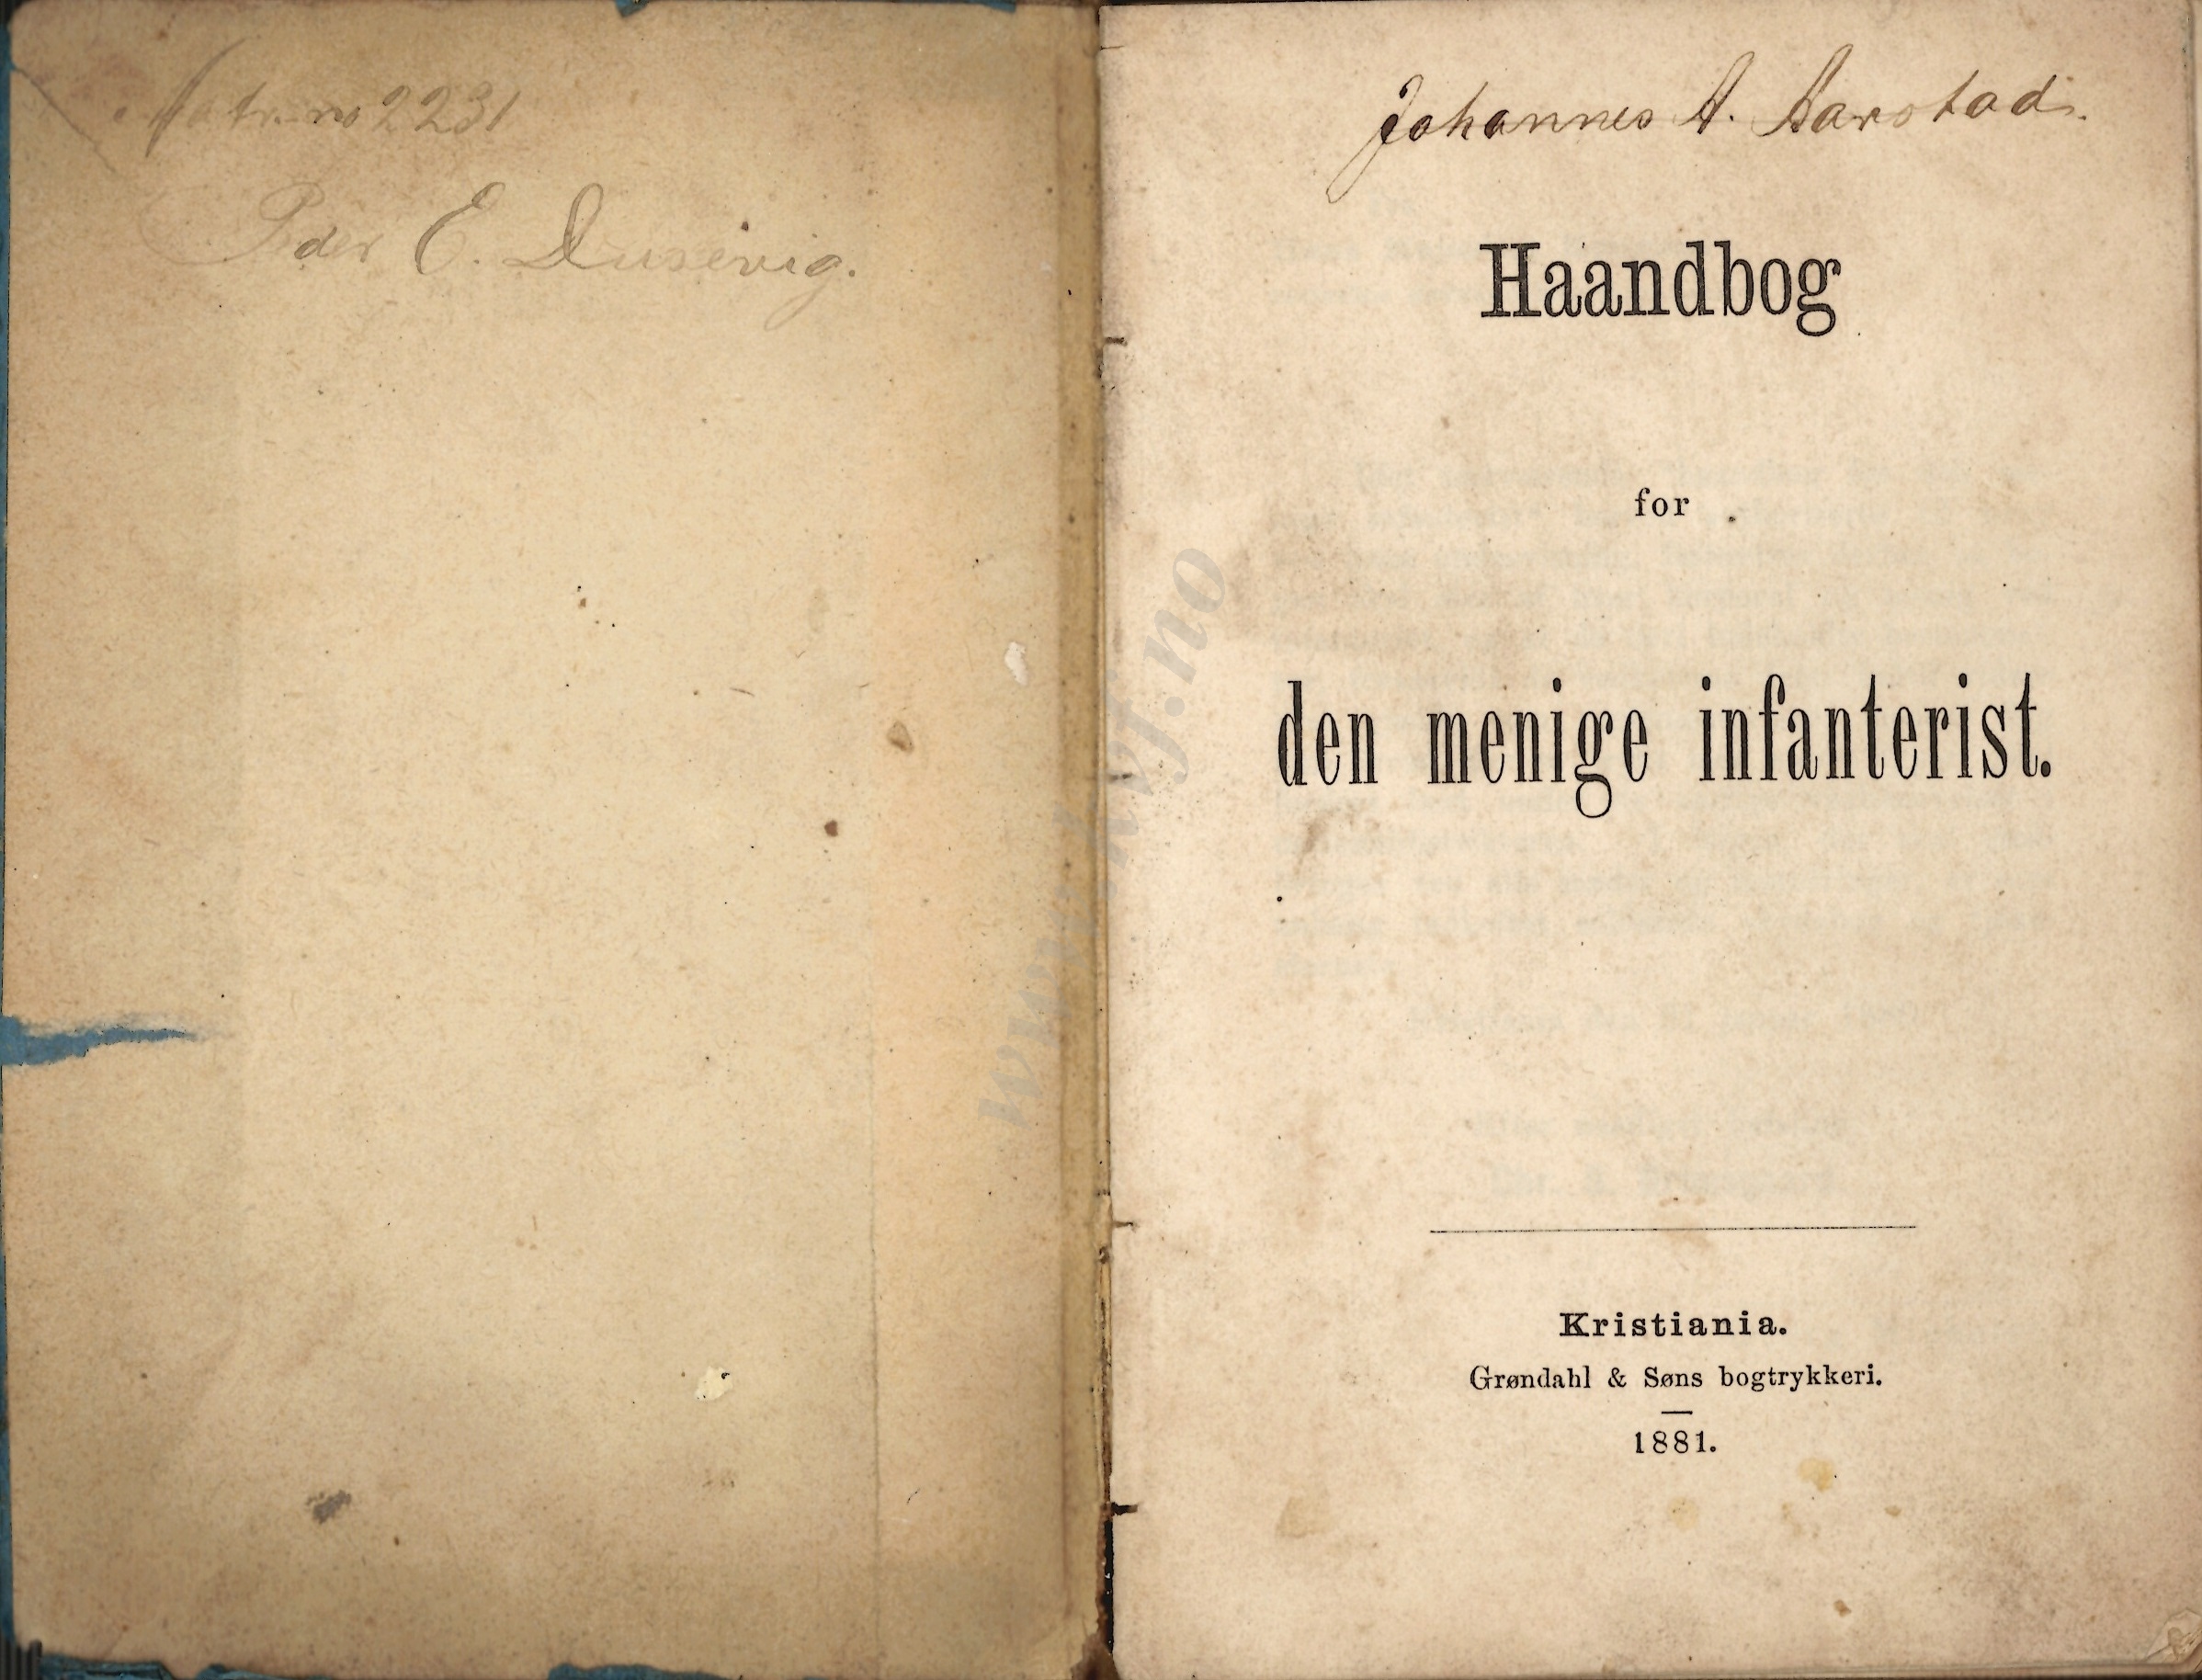 ./doc/reglement/Infanteri1881/Haandbog-Infanteri-1881-2.jpg